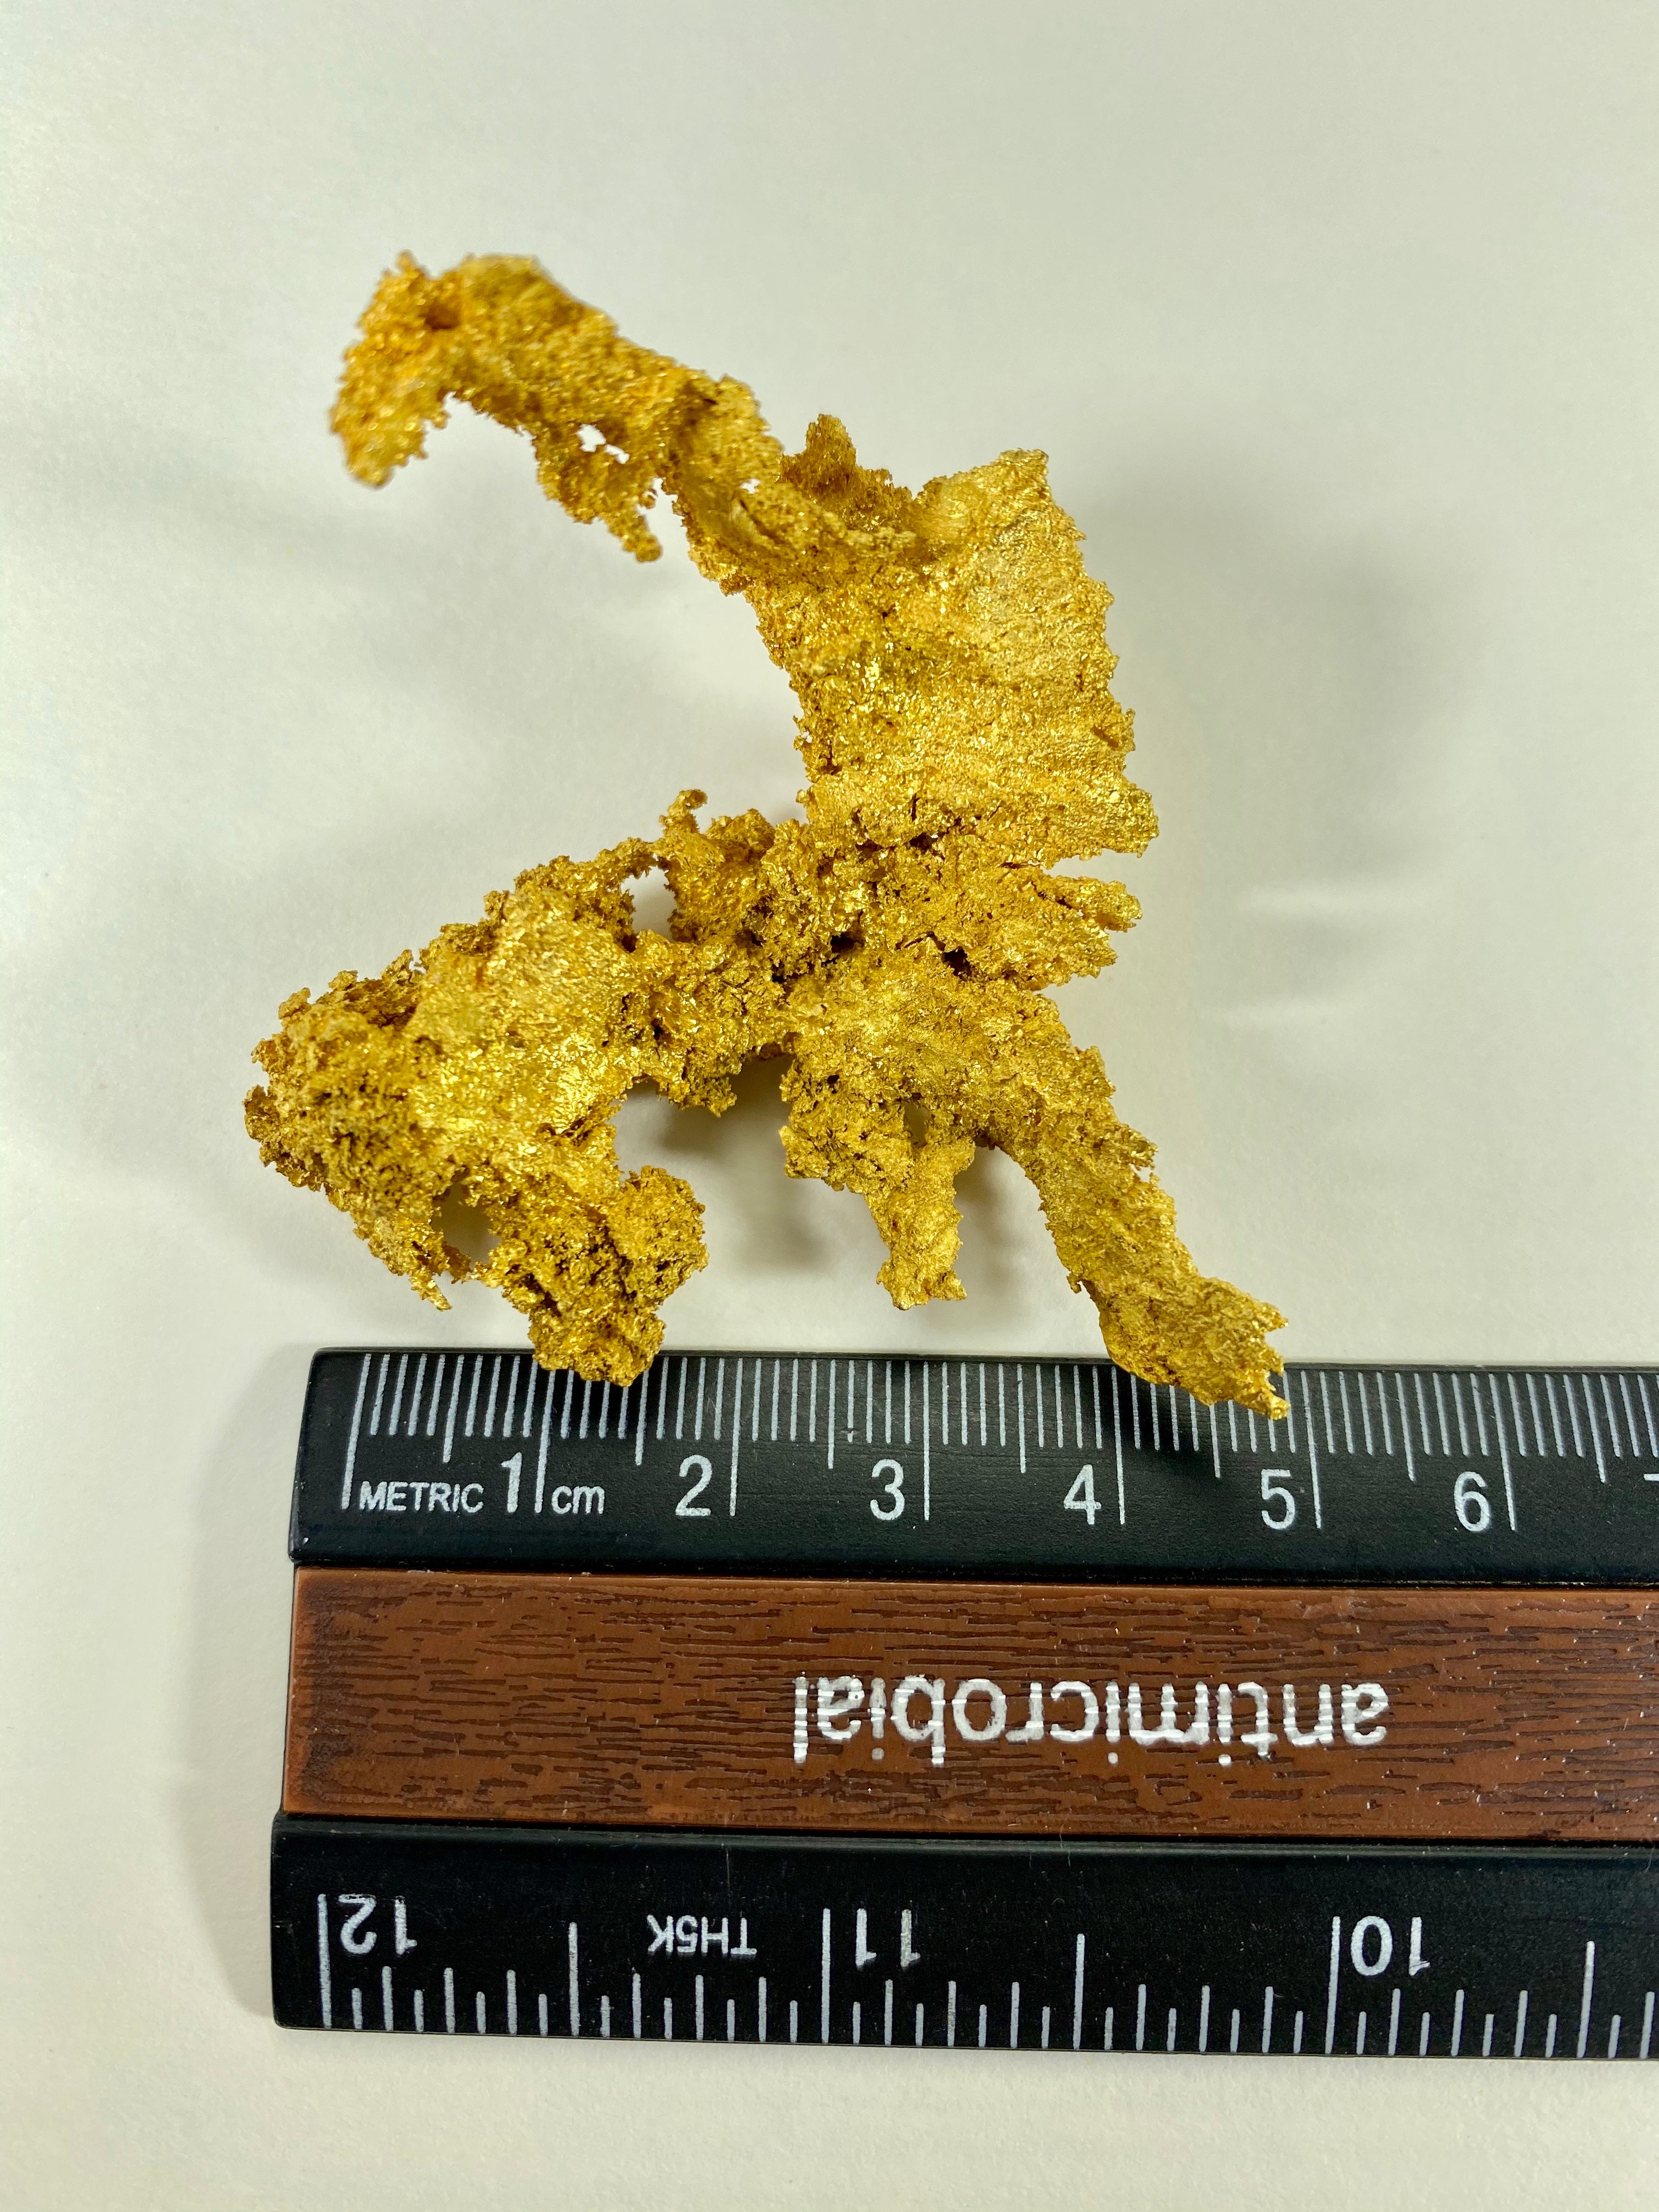 #0220 Large Crystalline Gold Specimen Original 16-1 Mine California 71.45 Grams Genuine 2.3 oz